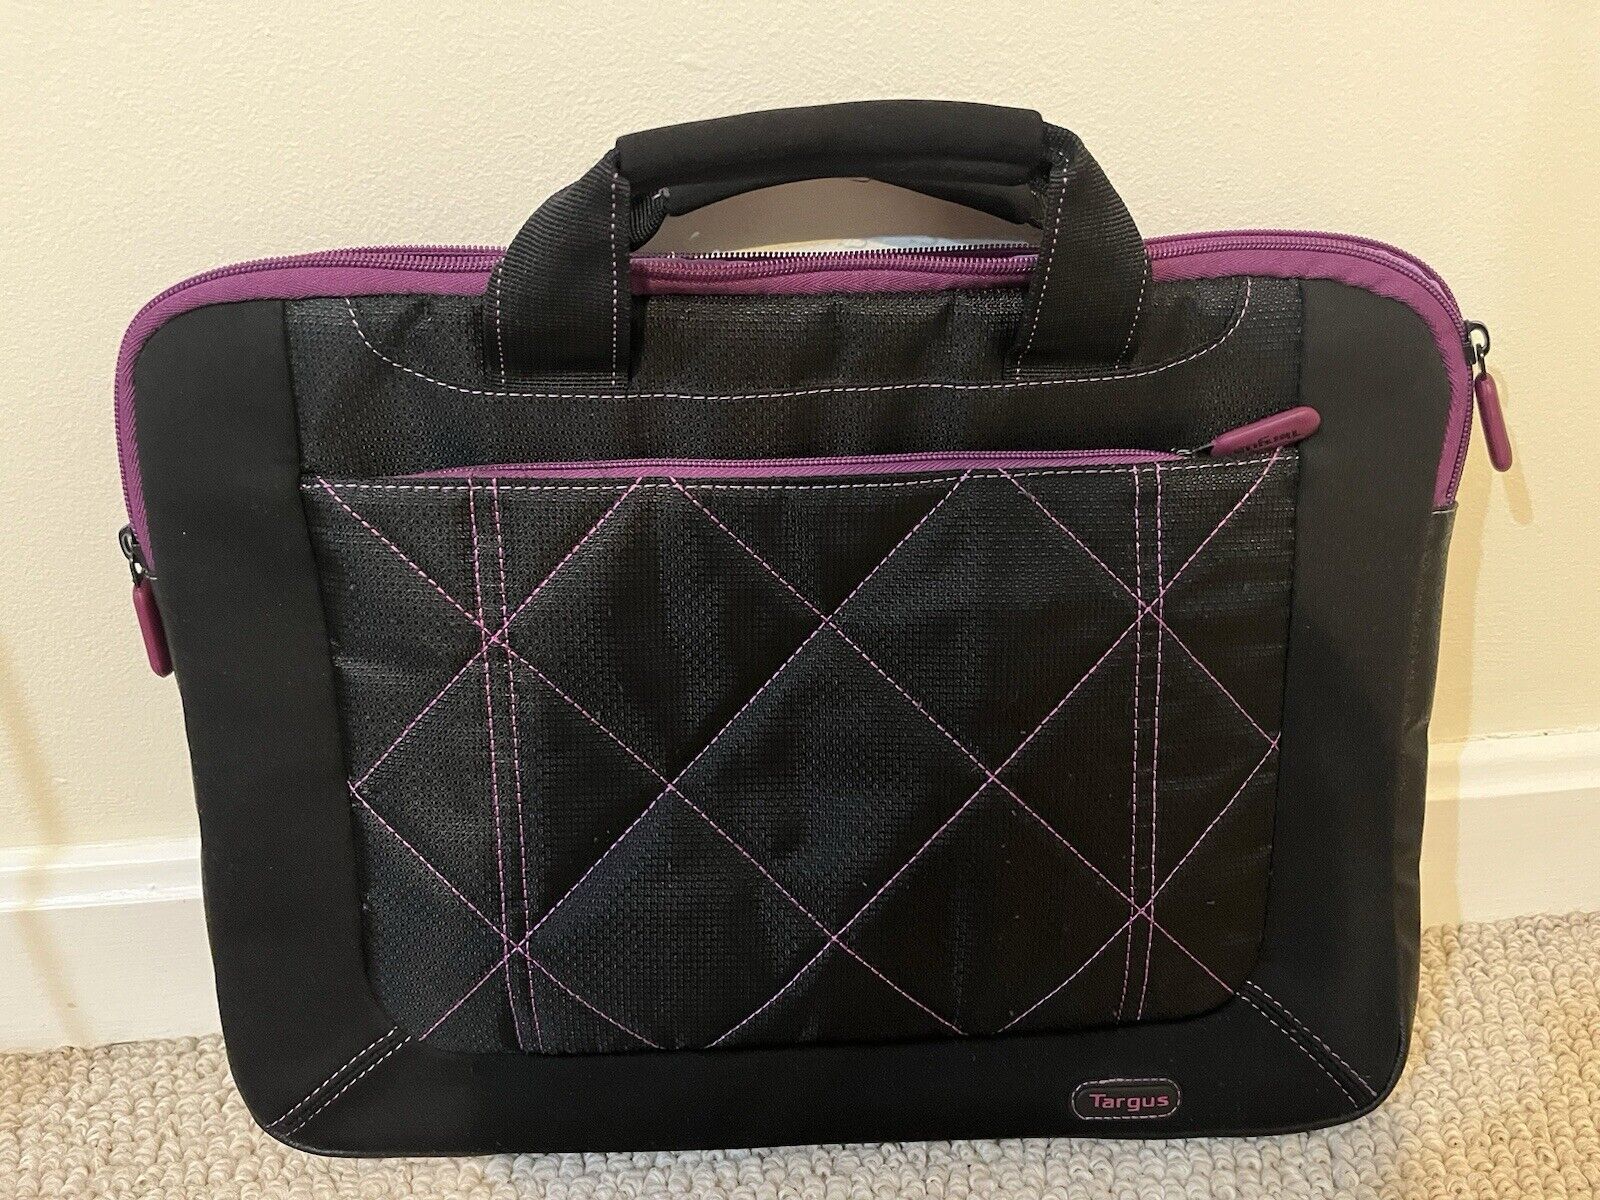 Targus - Pulse Laptop Sleeve for 16” Laptop - Black/Purple